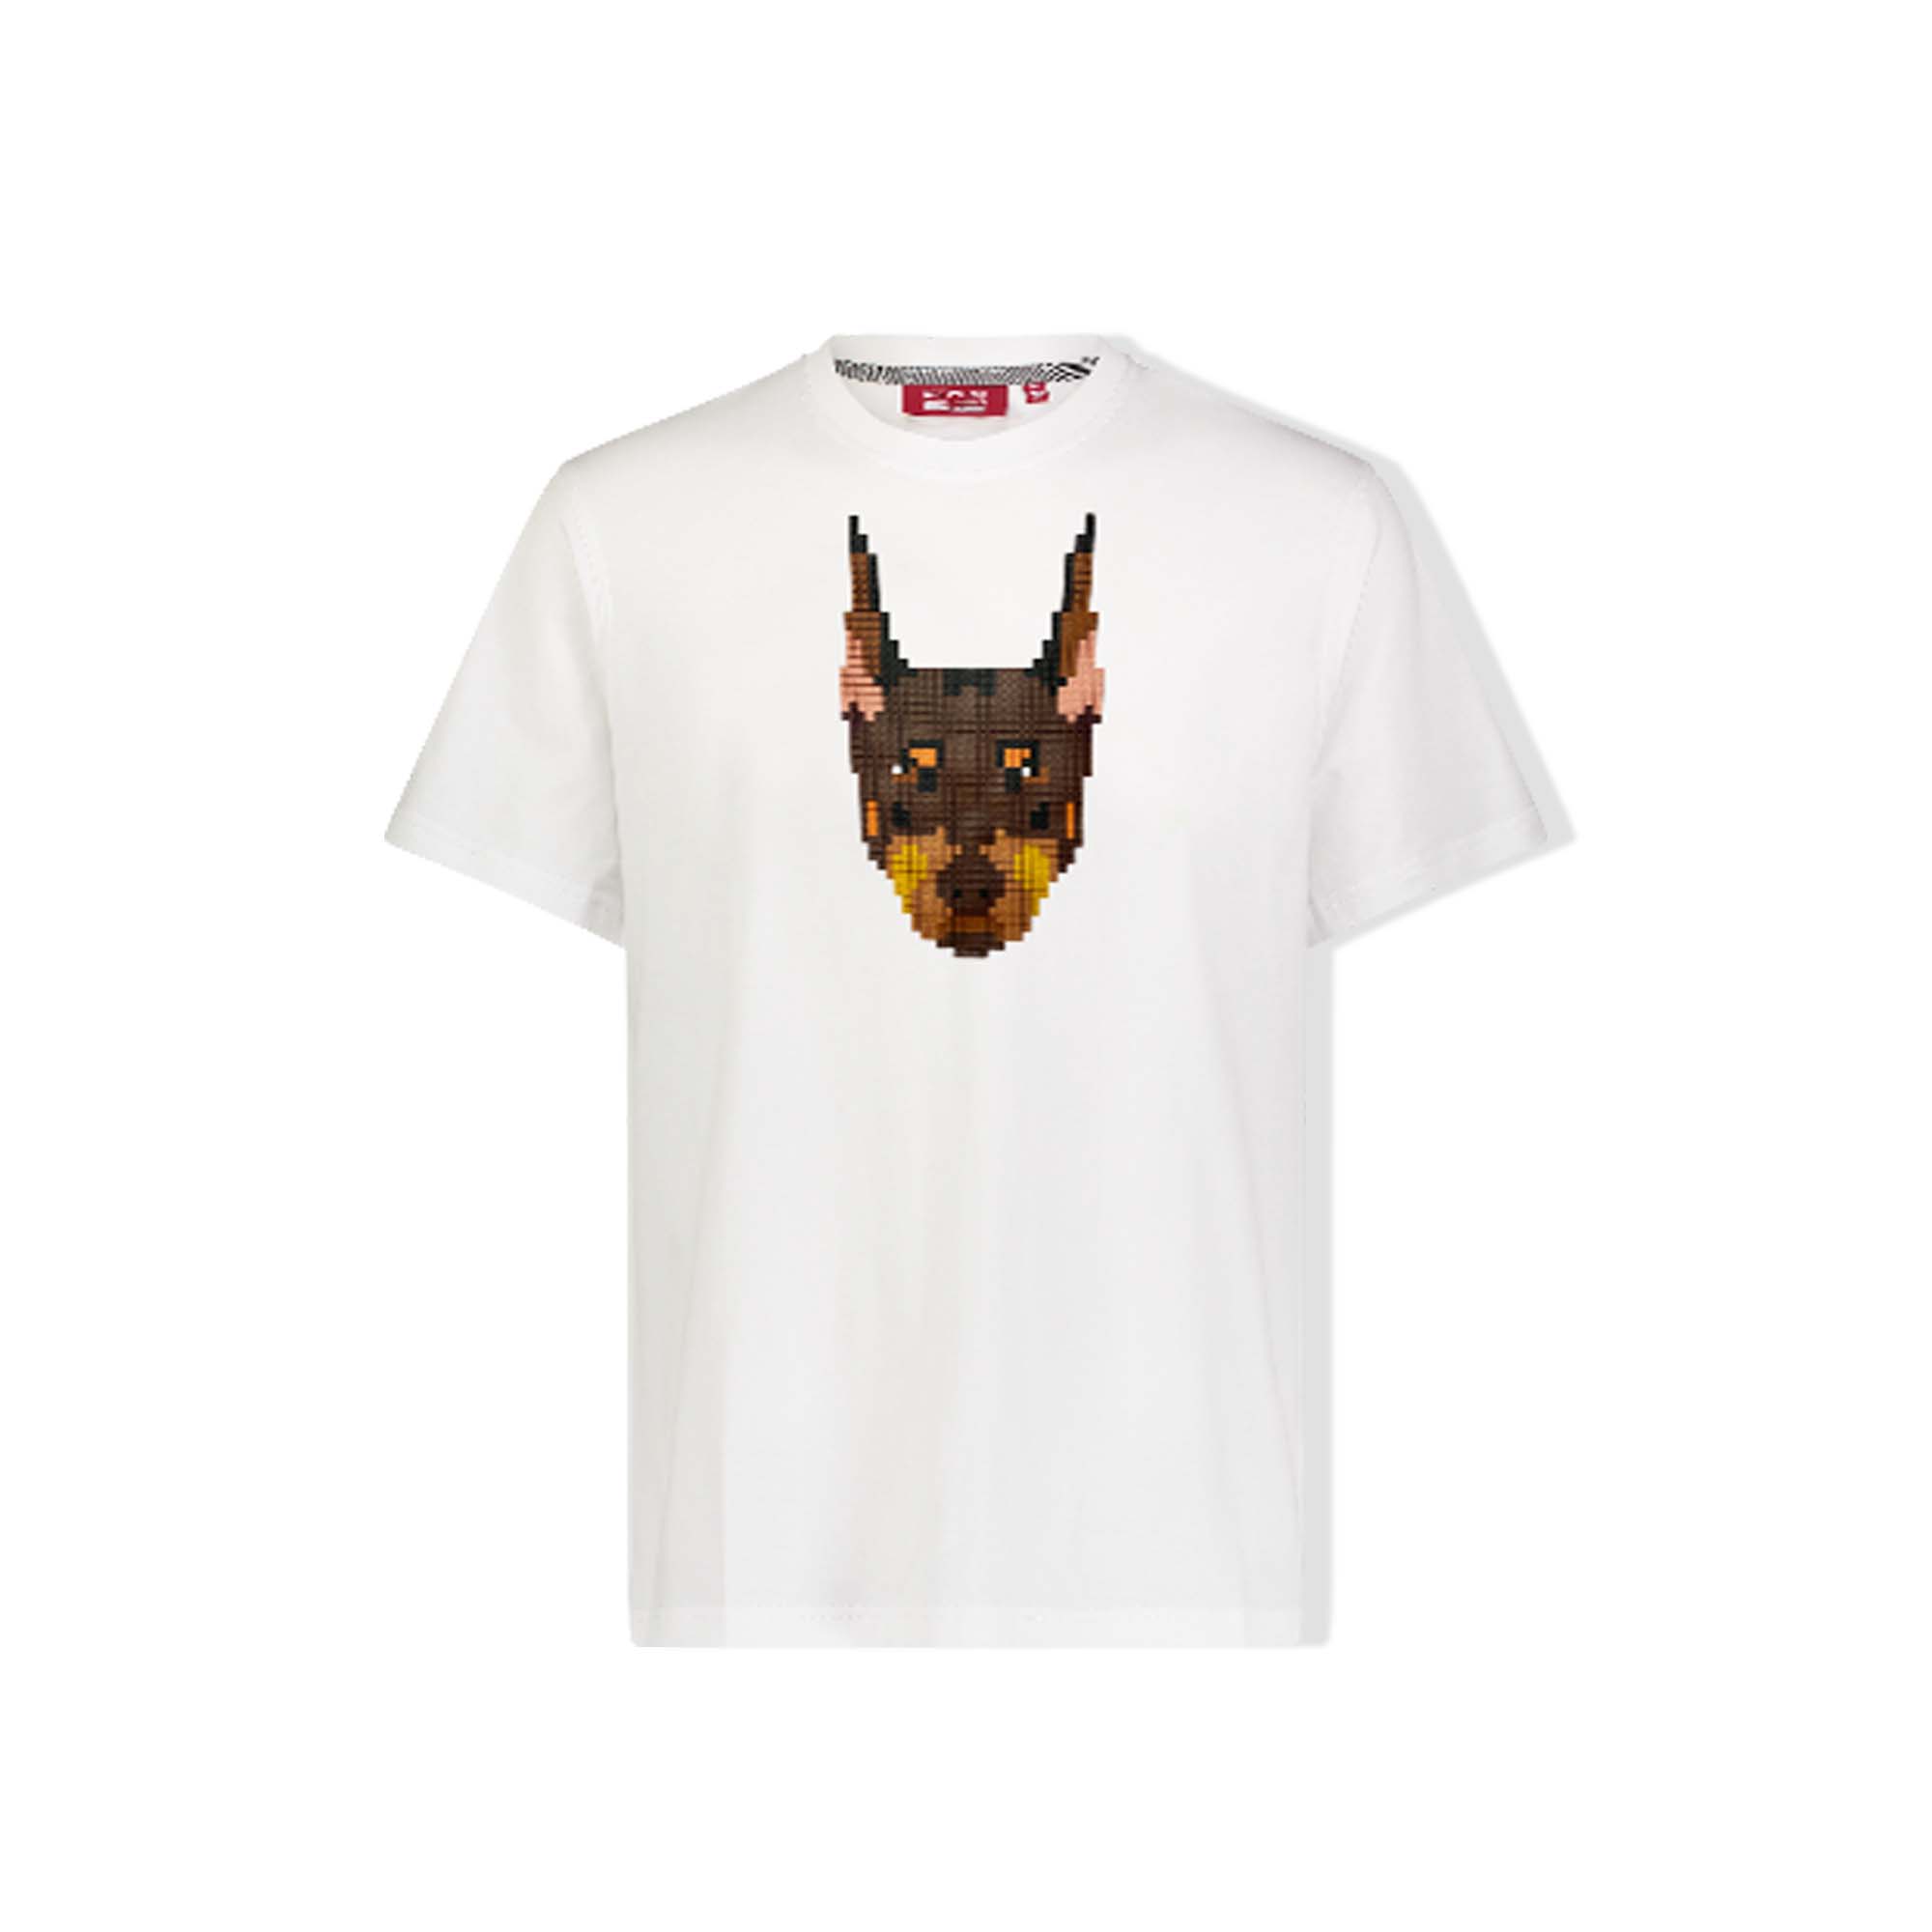 Buy 8-Bit Doberman Pincher T-Shirt - White Online